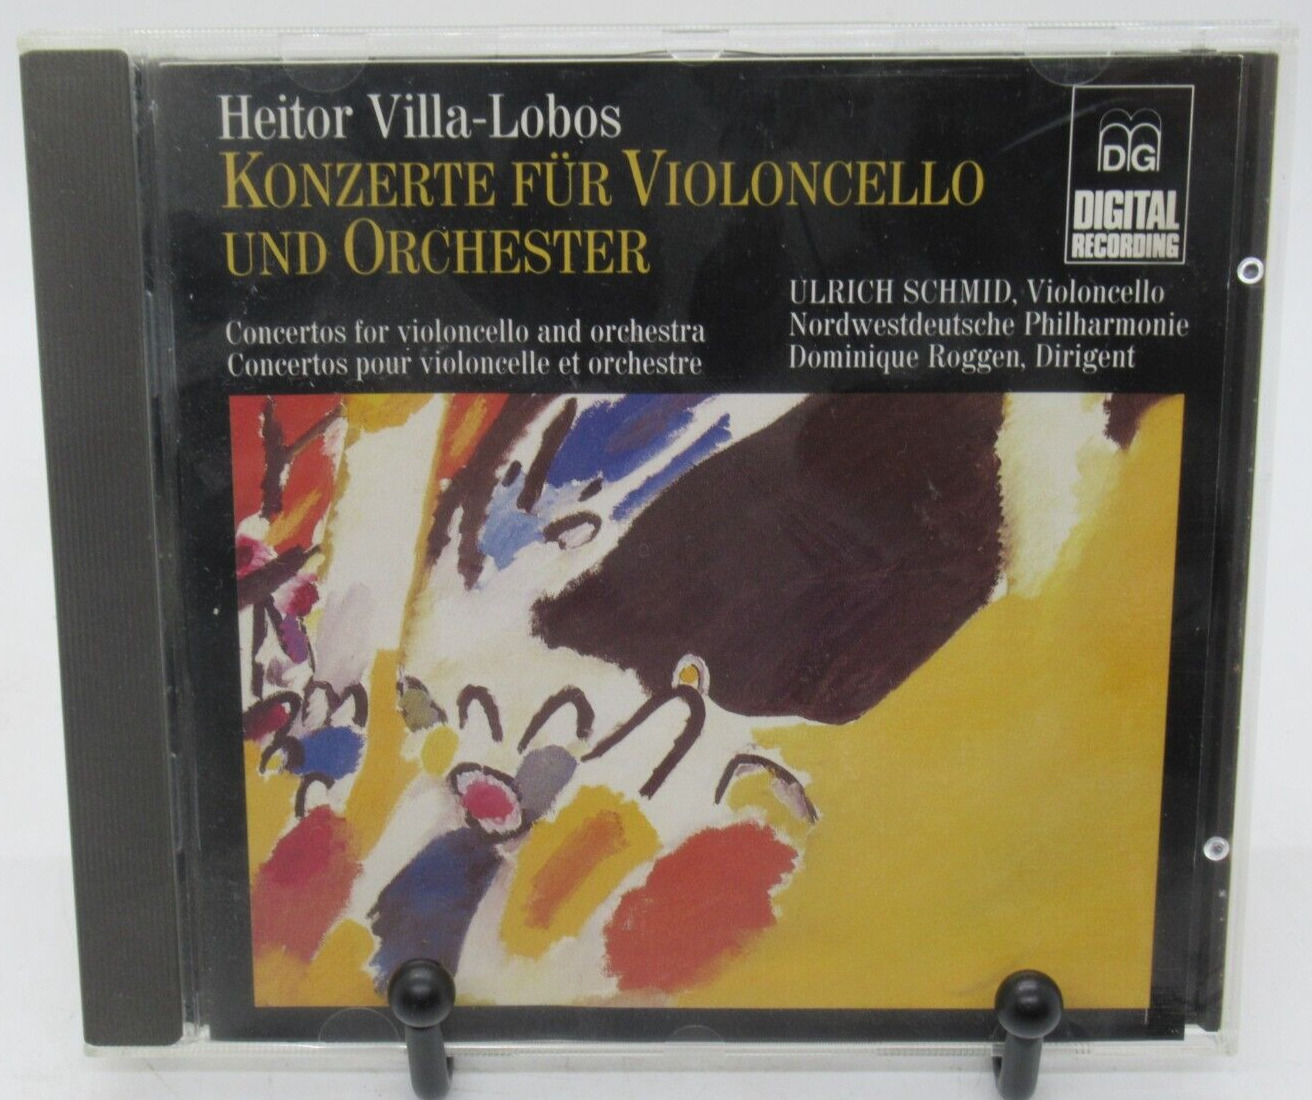 ULRICH SCHMID - HEITOR VILLA-LOBOS: KONZER FUR VIOLONCELLO UND ORCH. MUSIC CD